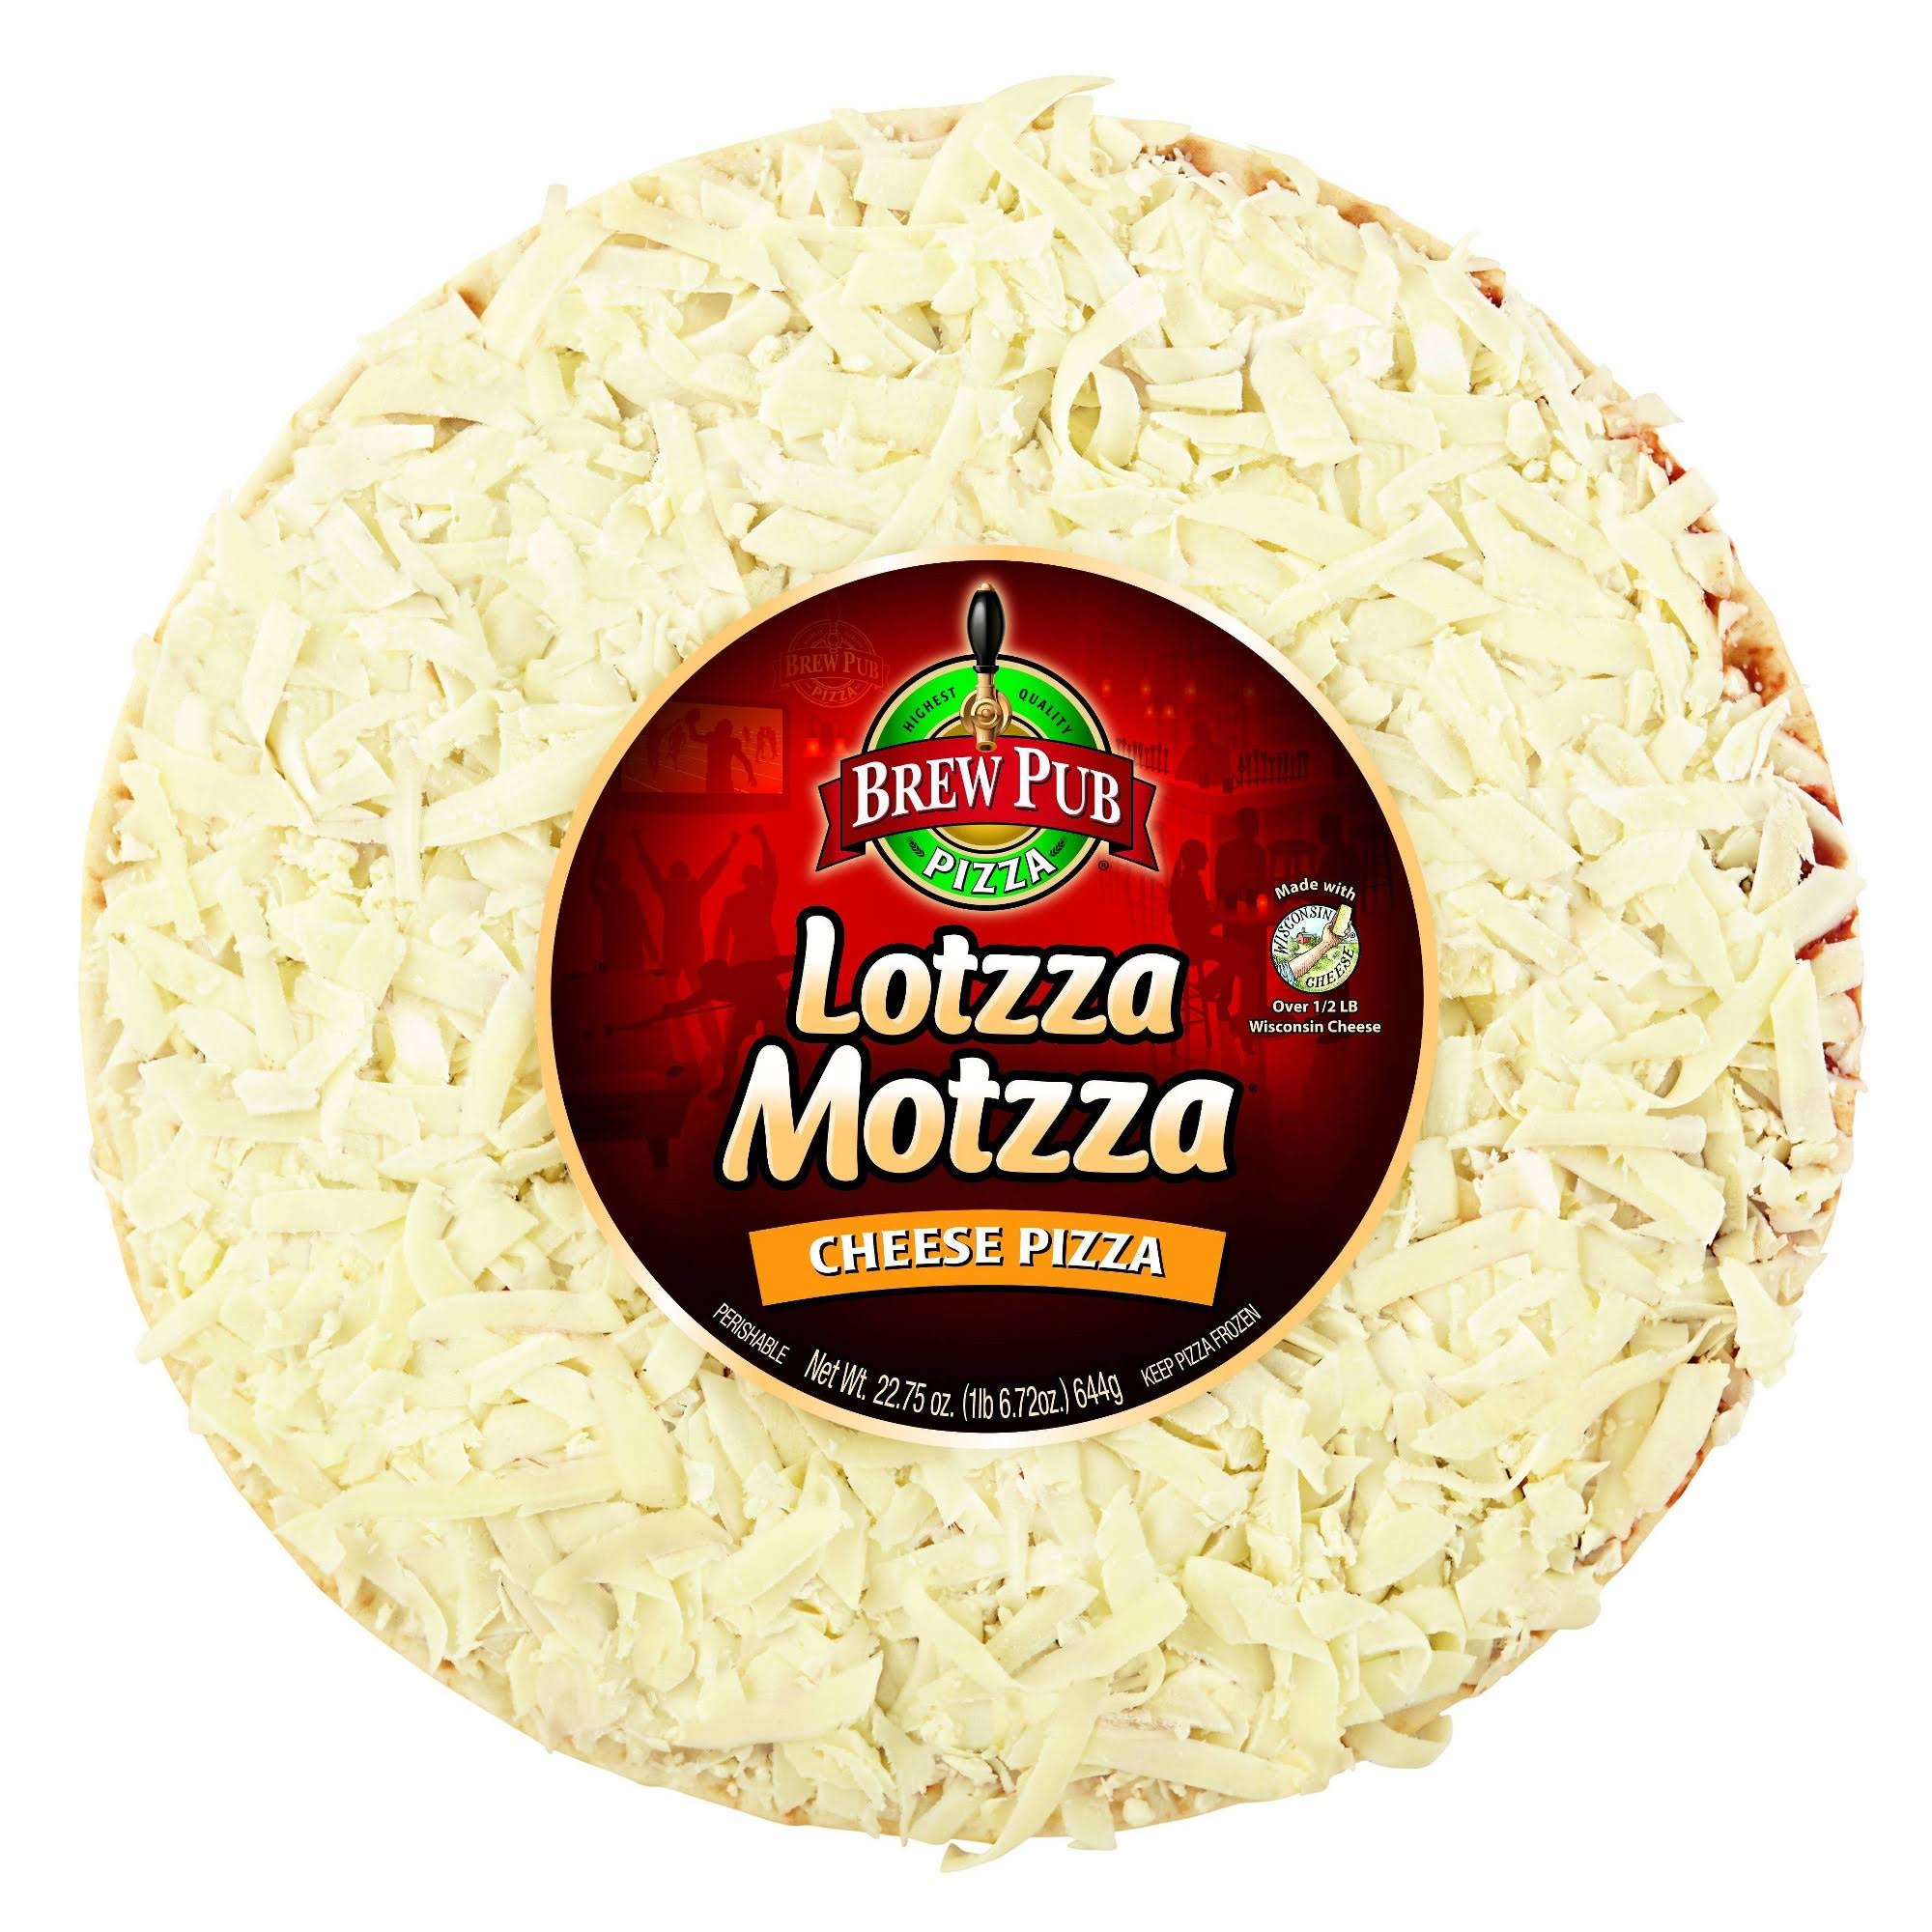 Brew Pub Lotzza Motzza Pizza, 12-Inch, Cheese - 22.75 oz